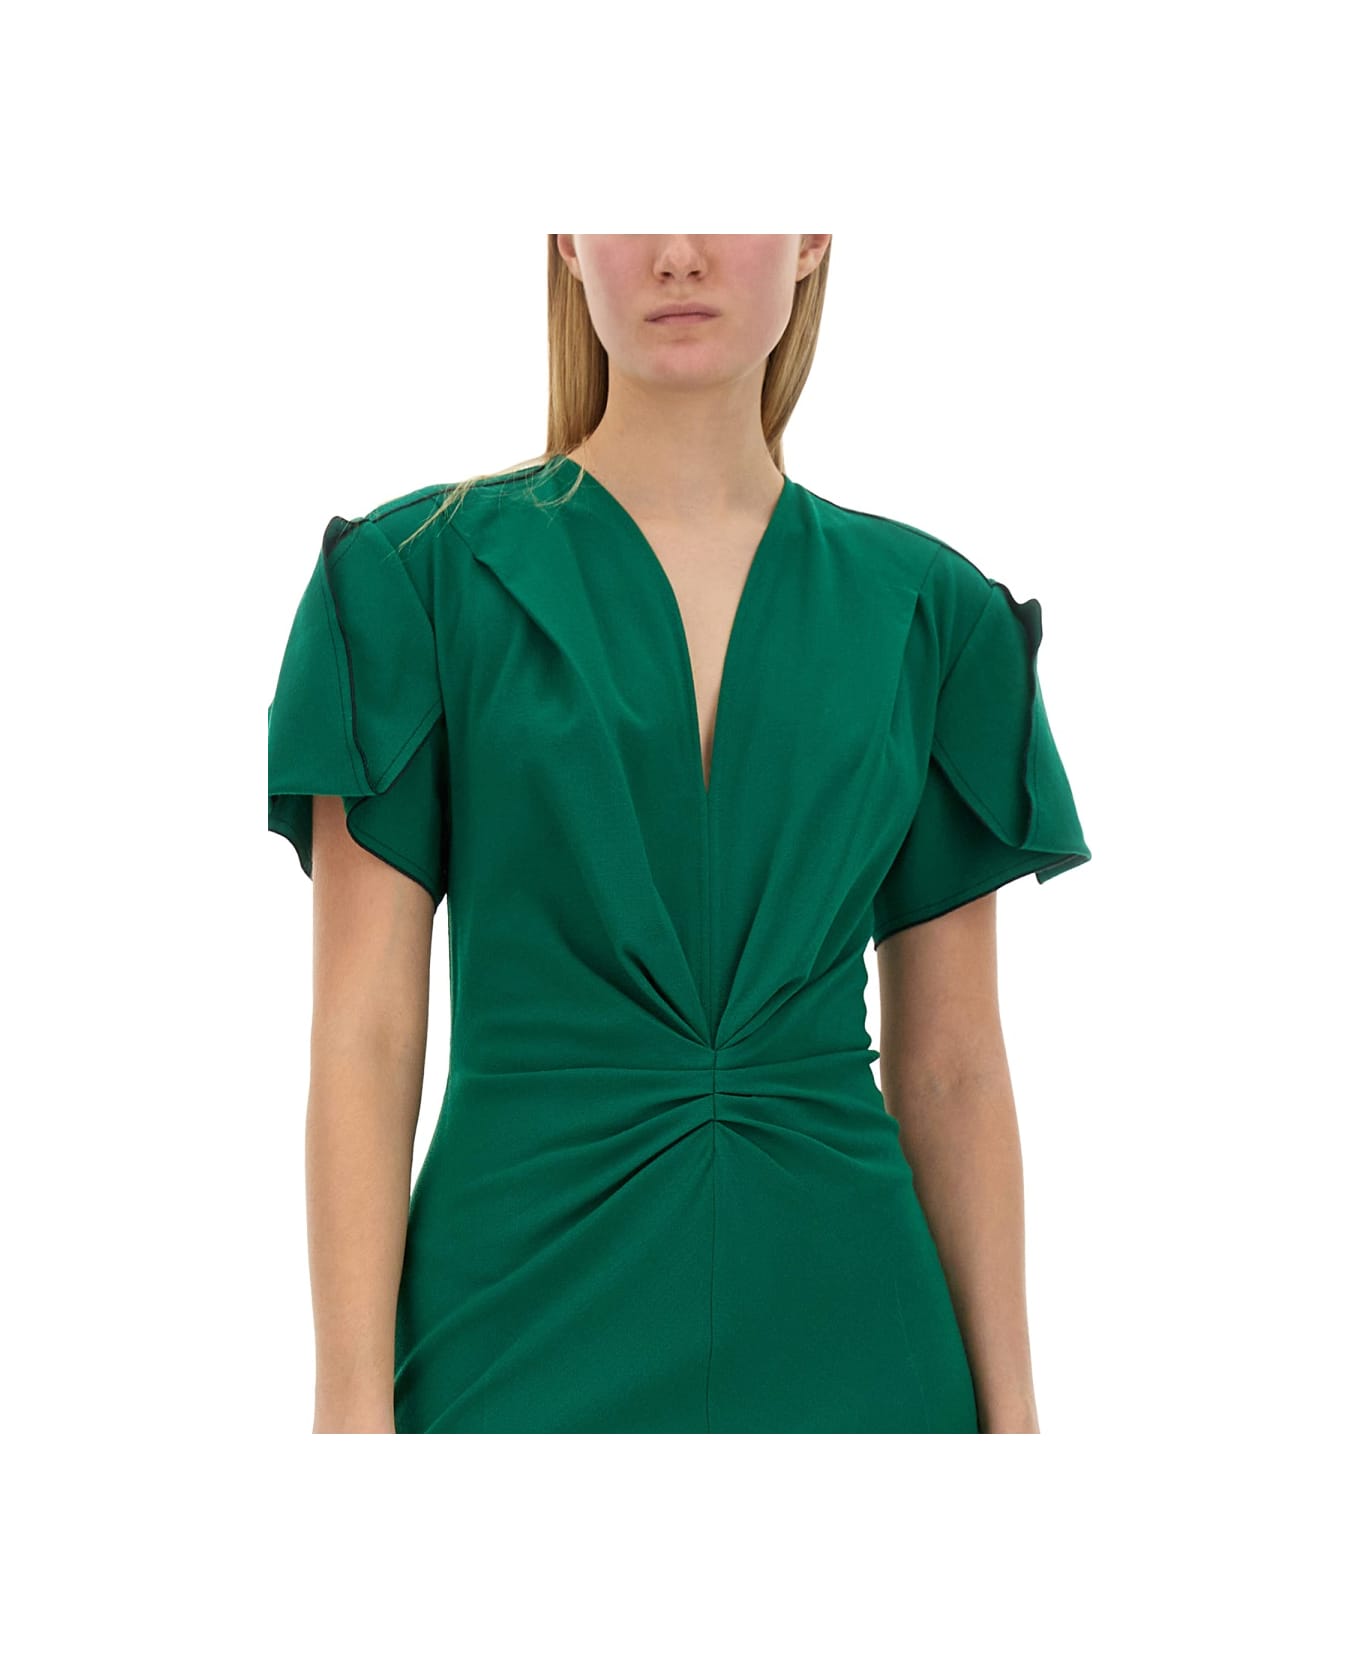 Victoria Beckham V-neck Dress - GREEN